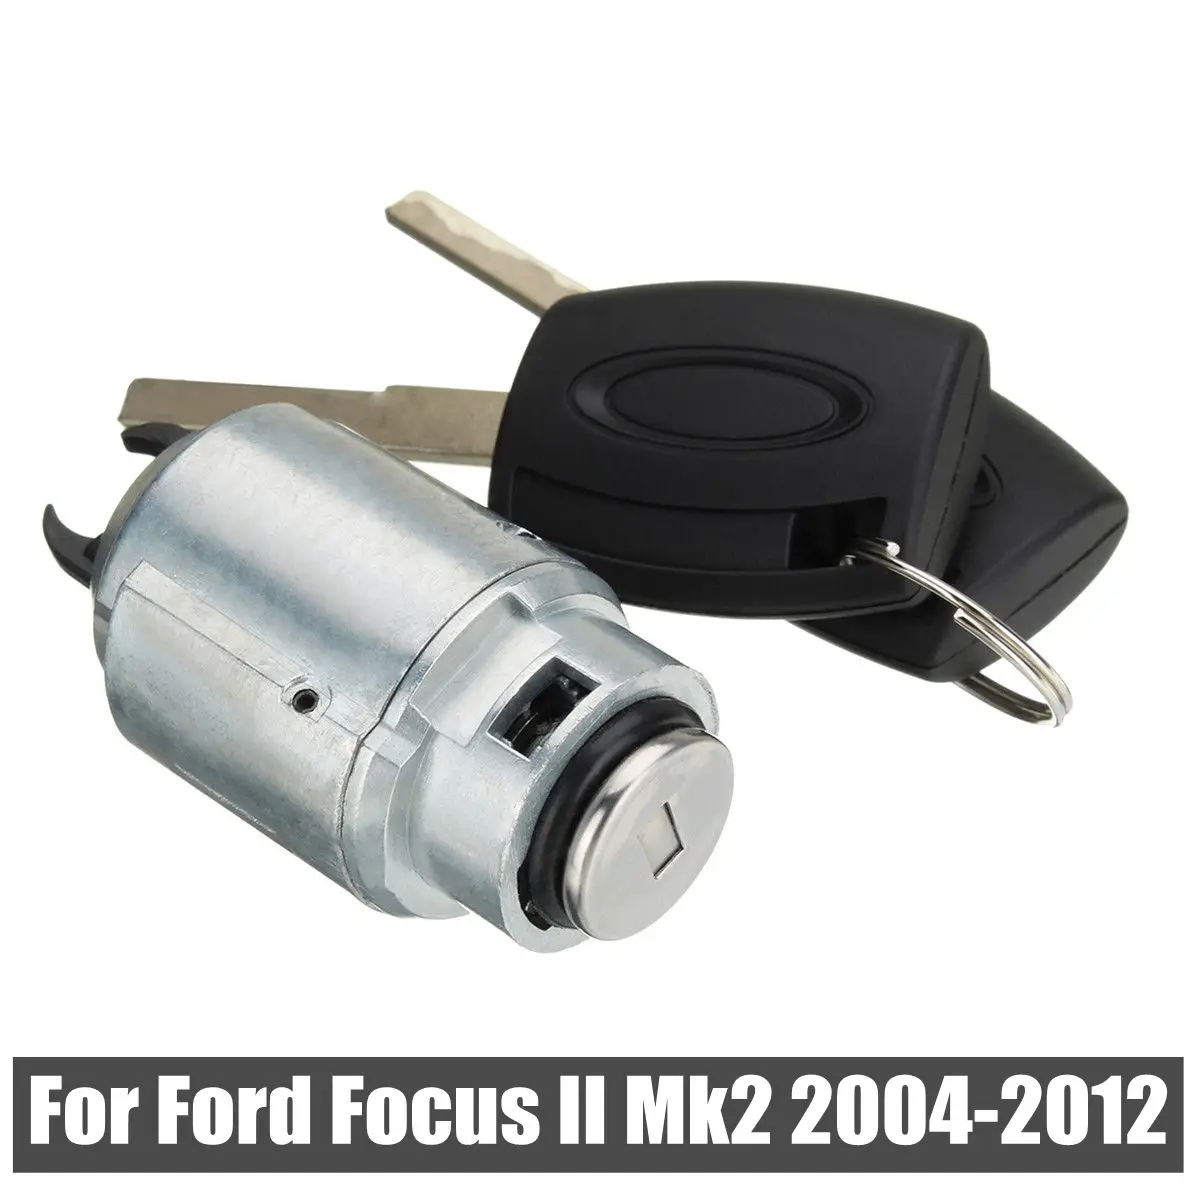 

Car Hood Bonnet Lock Repair Kit With 2 Keys For Ford for Focus II Mk2 2004-2012 4M5AA16B970AB